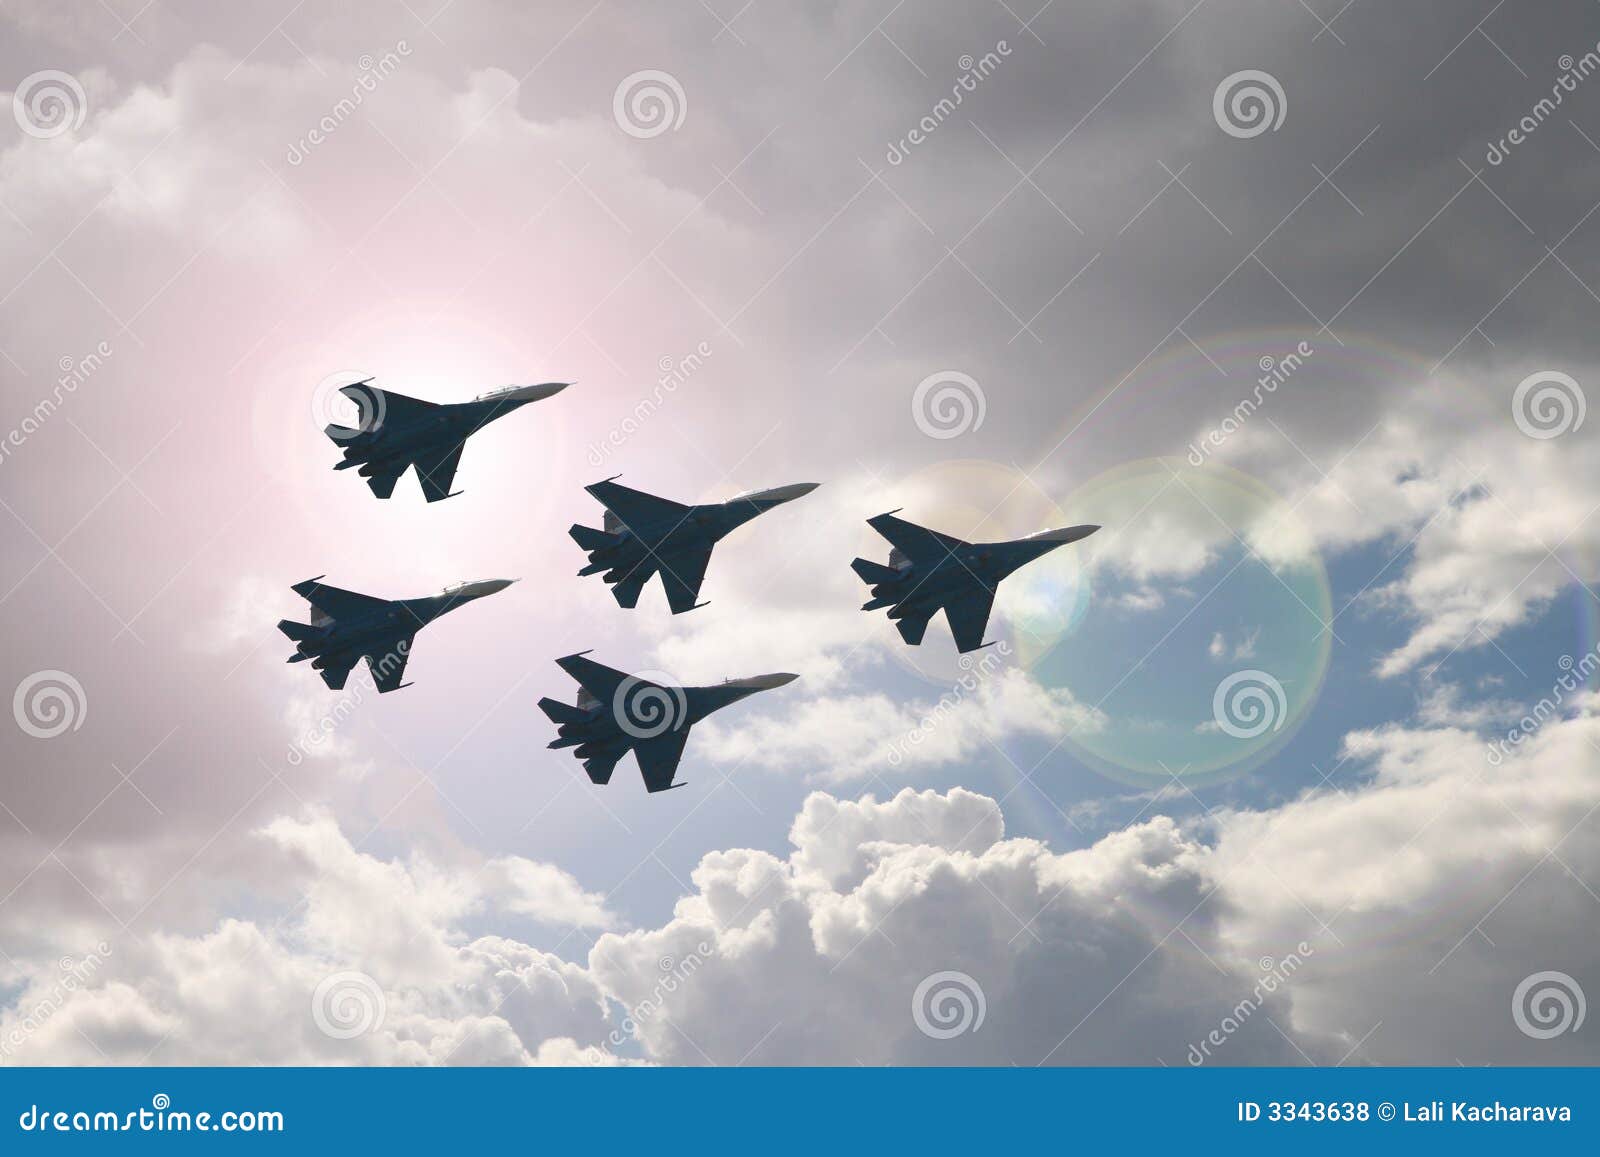 five fighter jets